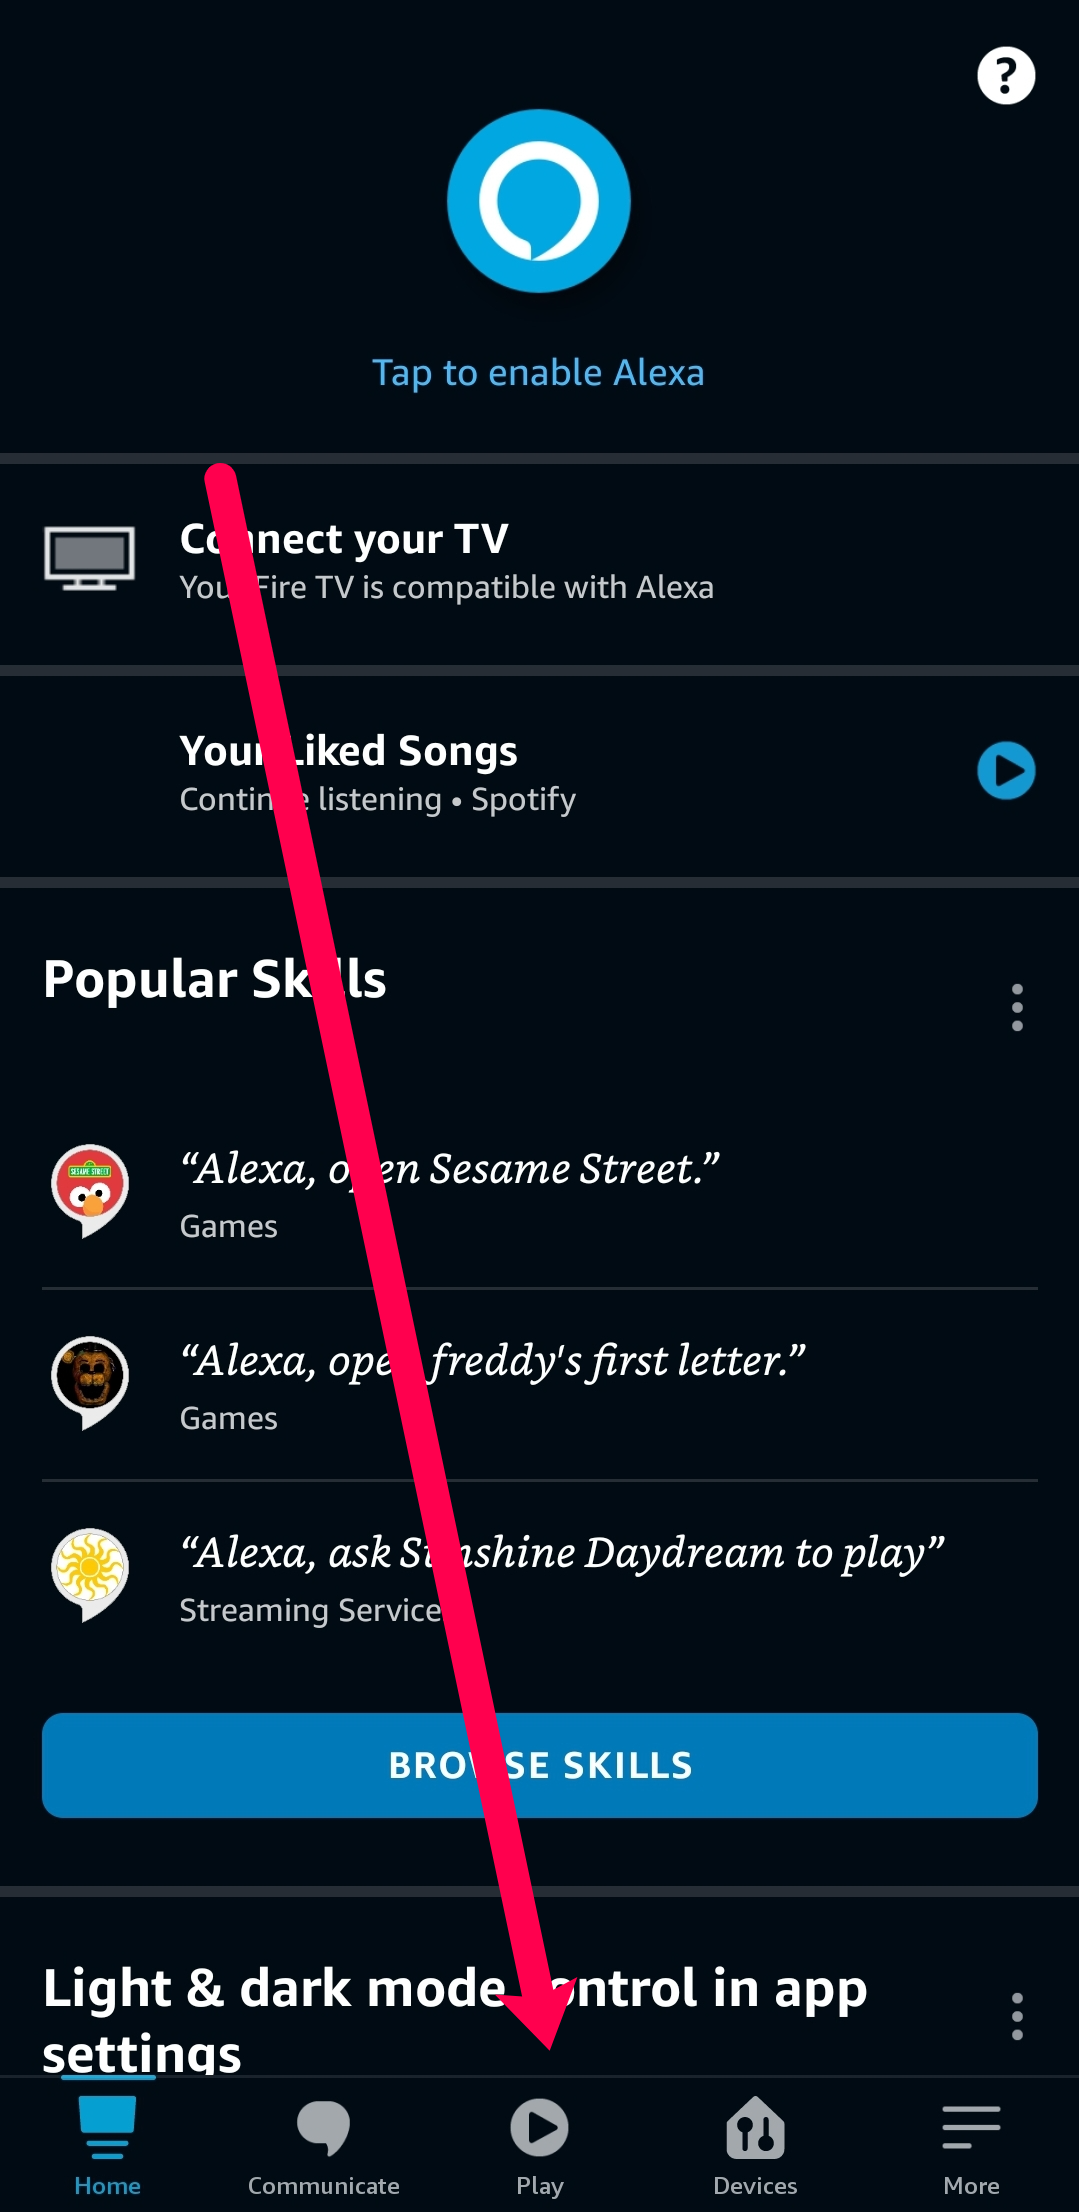 Er Spotify gratis på Alexa?